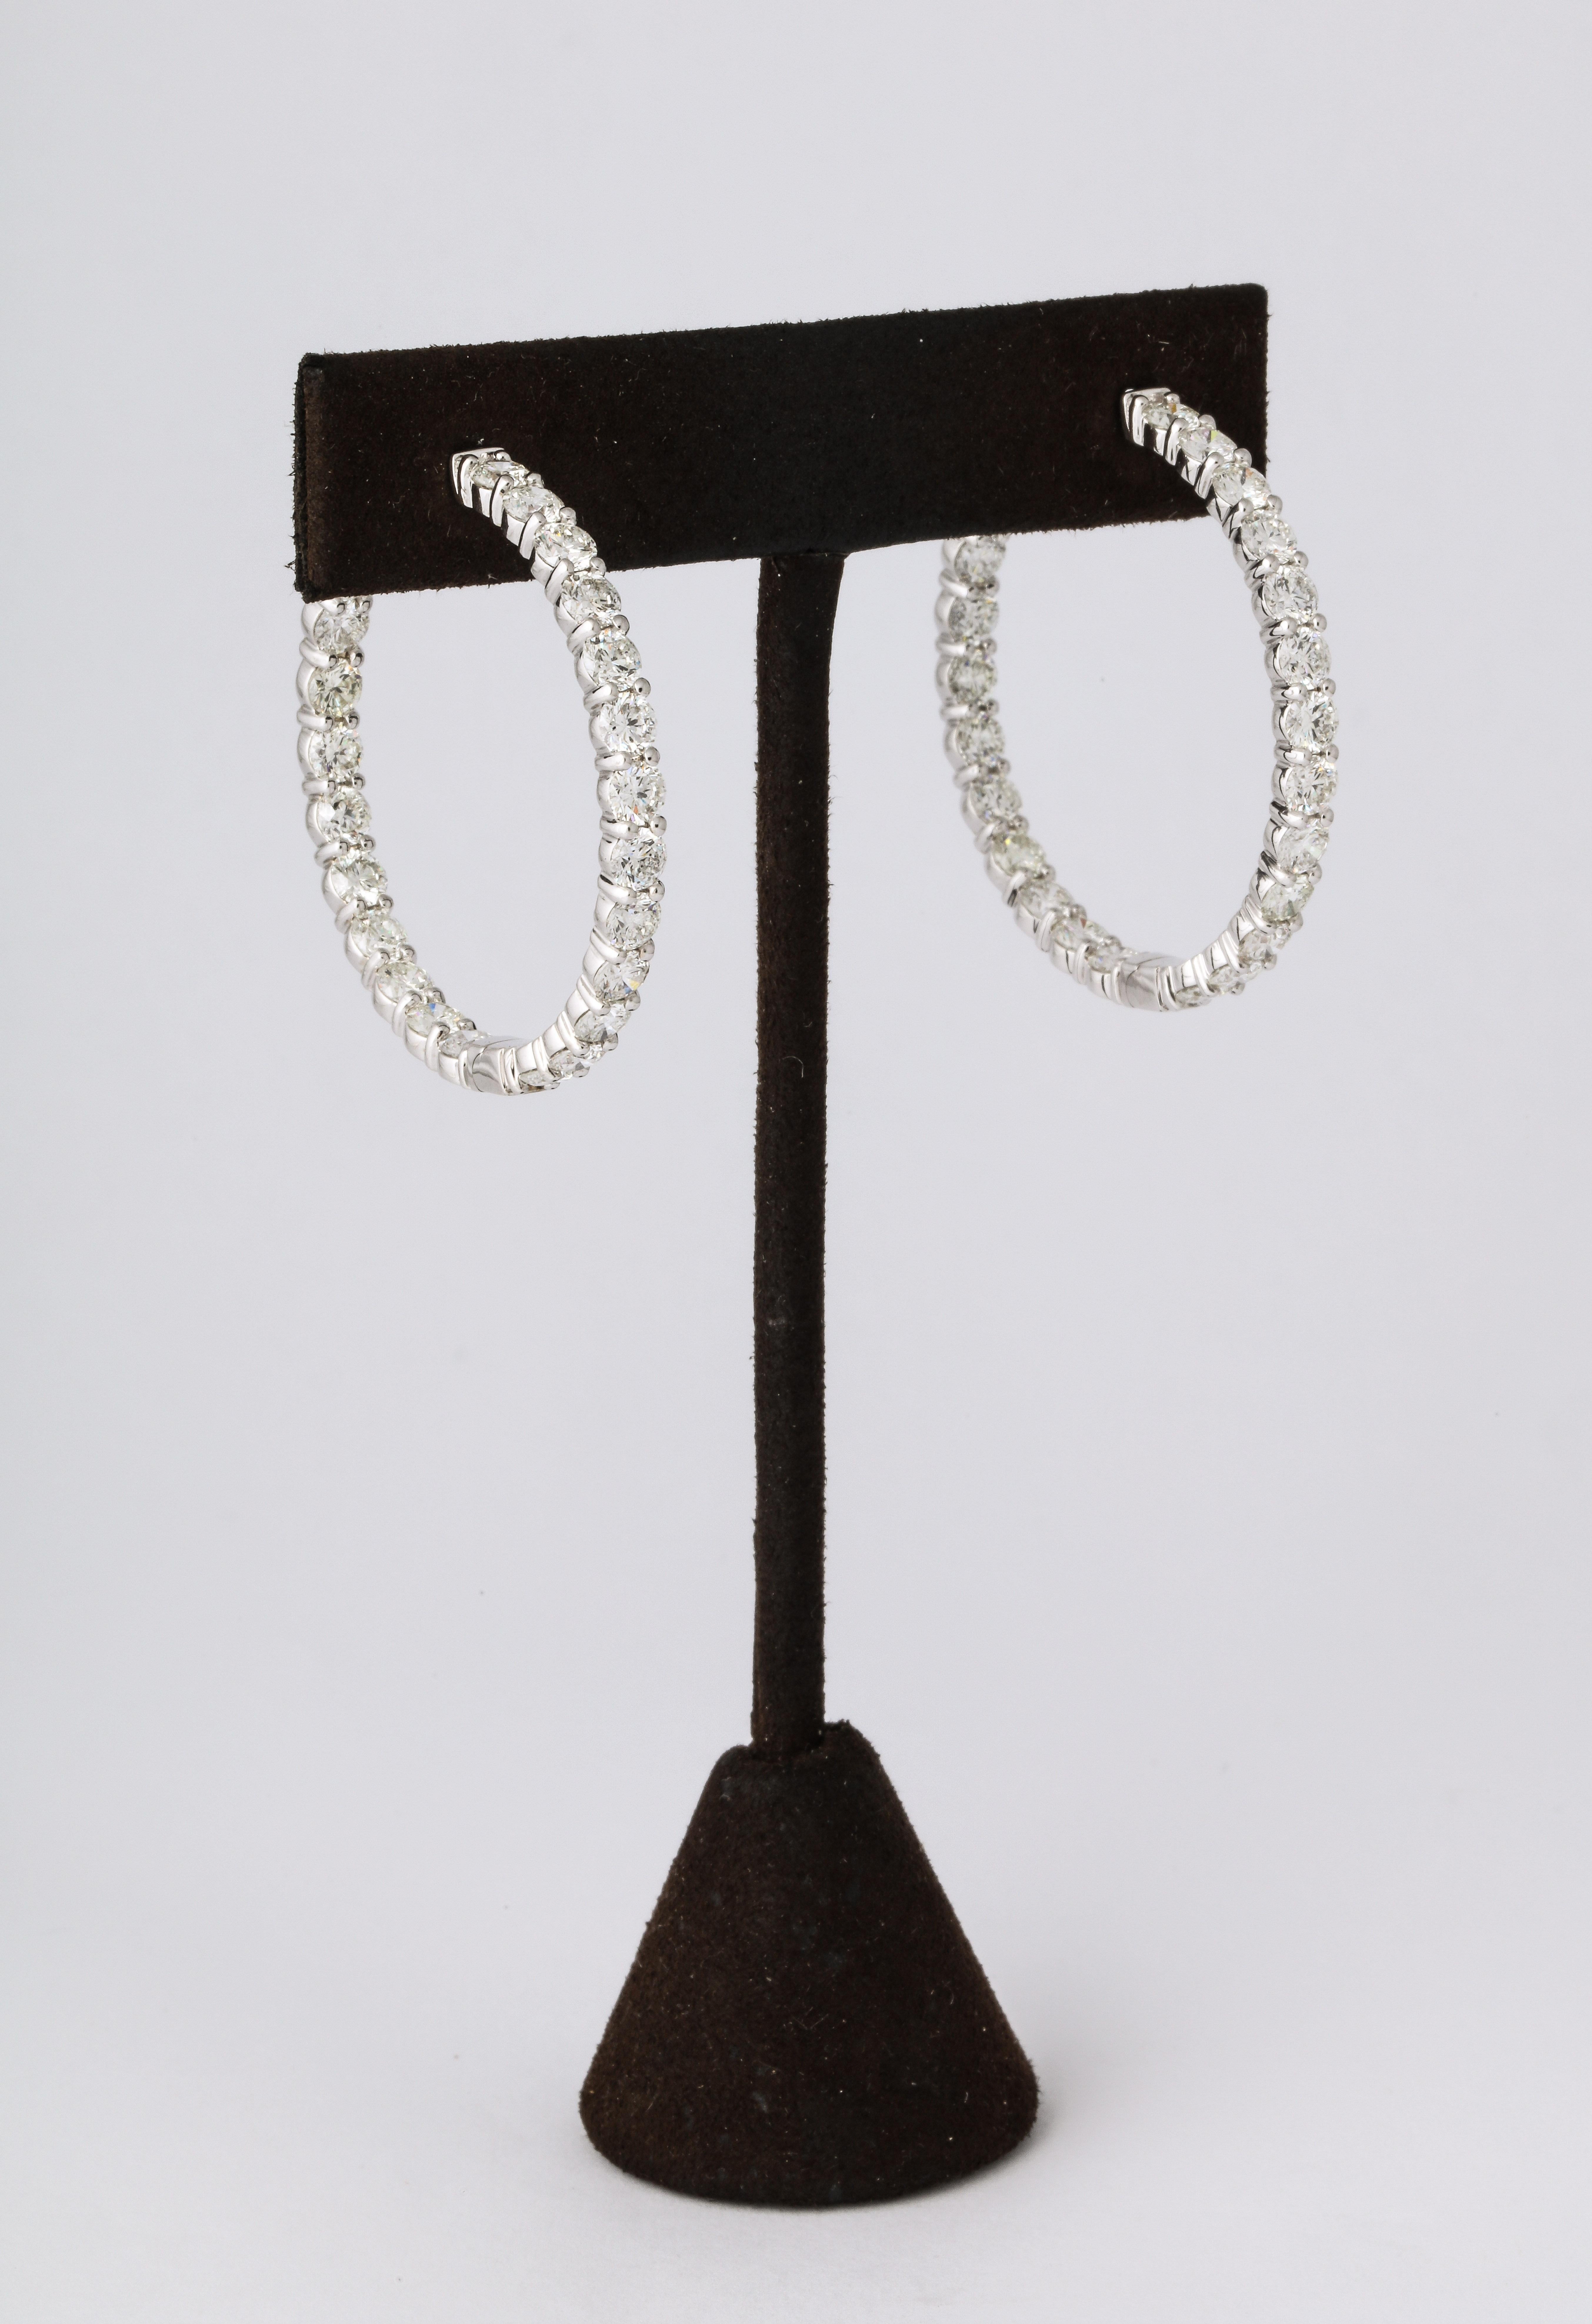 
A beautiful pair of classic diamond hoops.

8.83 carats of white round brilliant cut diamonds set 